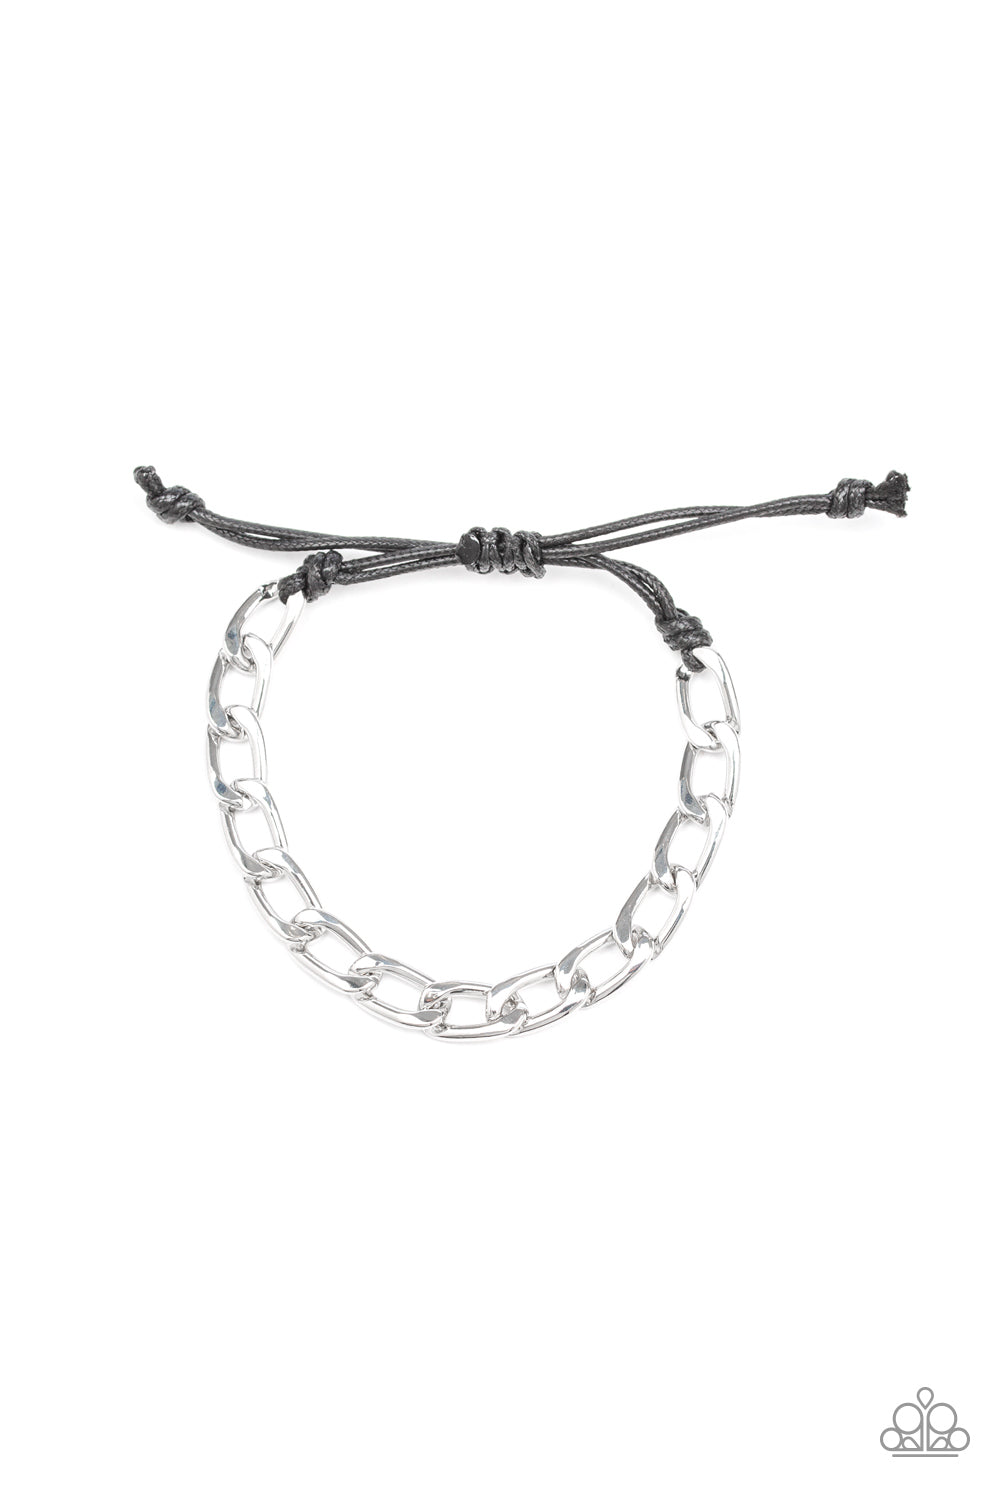 Paparazzi Accessories Goalpost - Silver Bracelet 